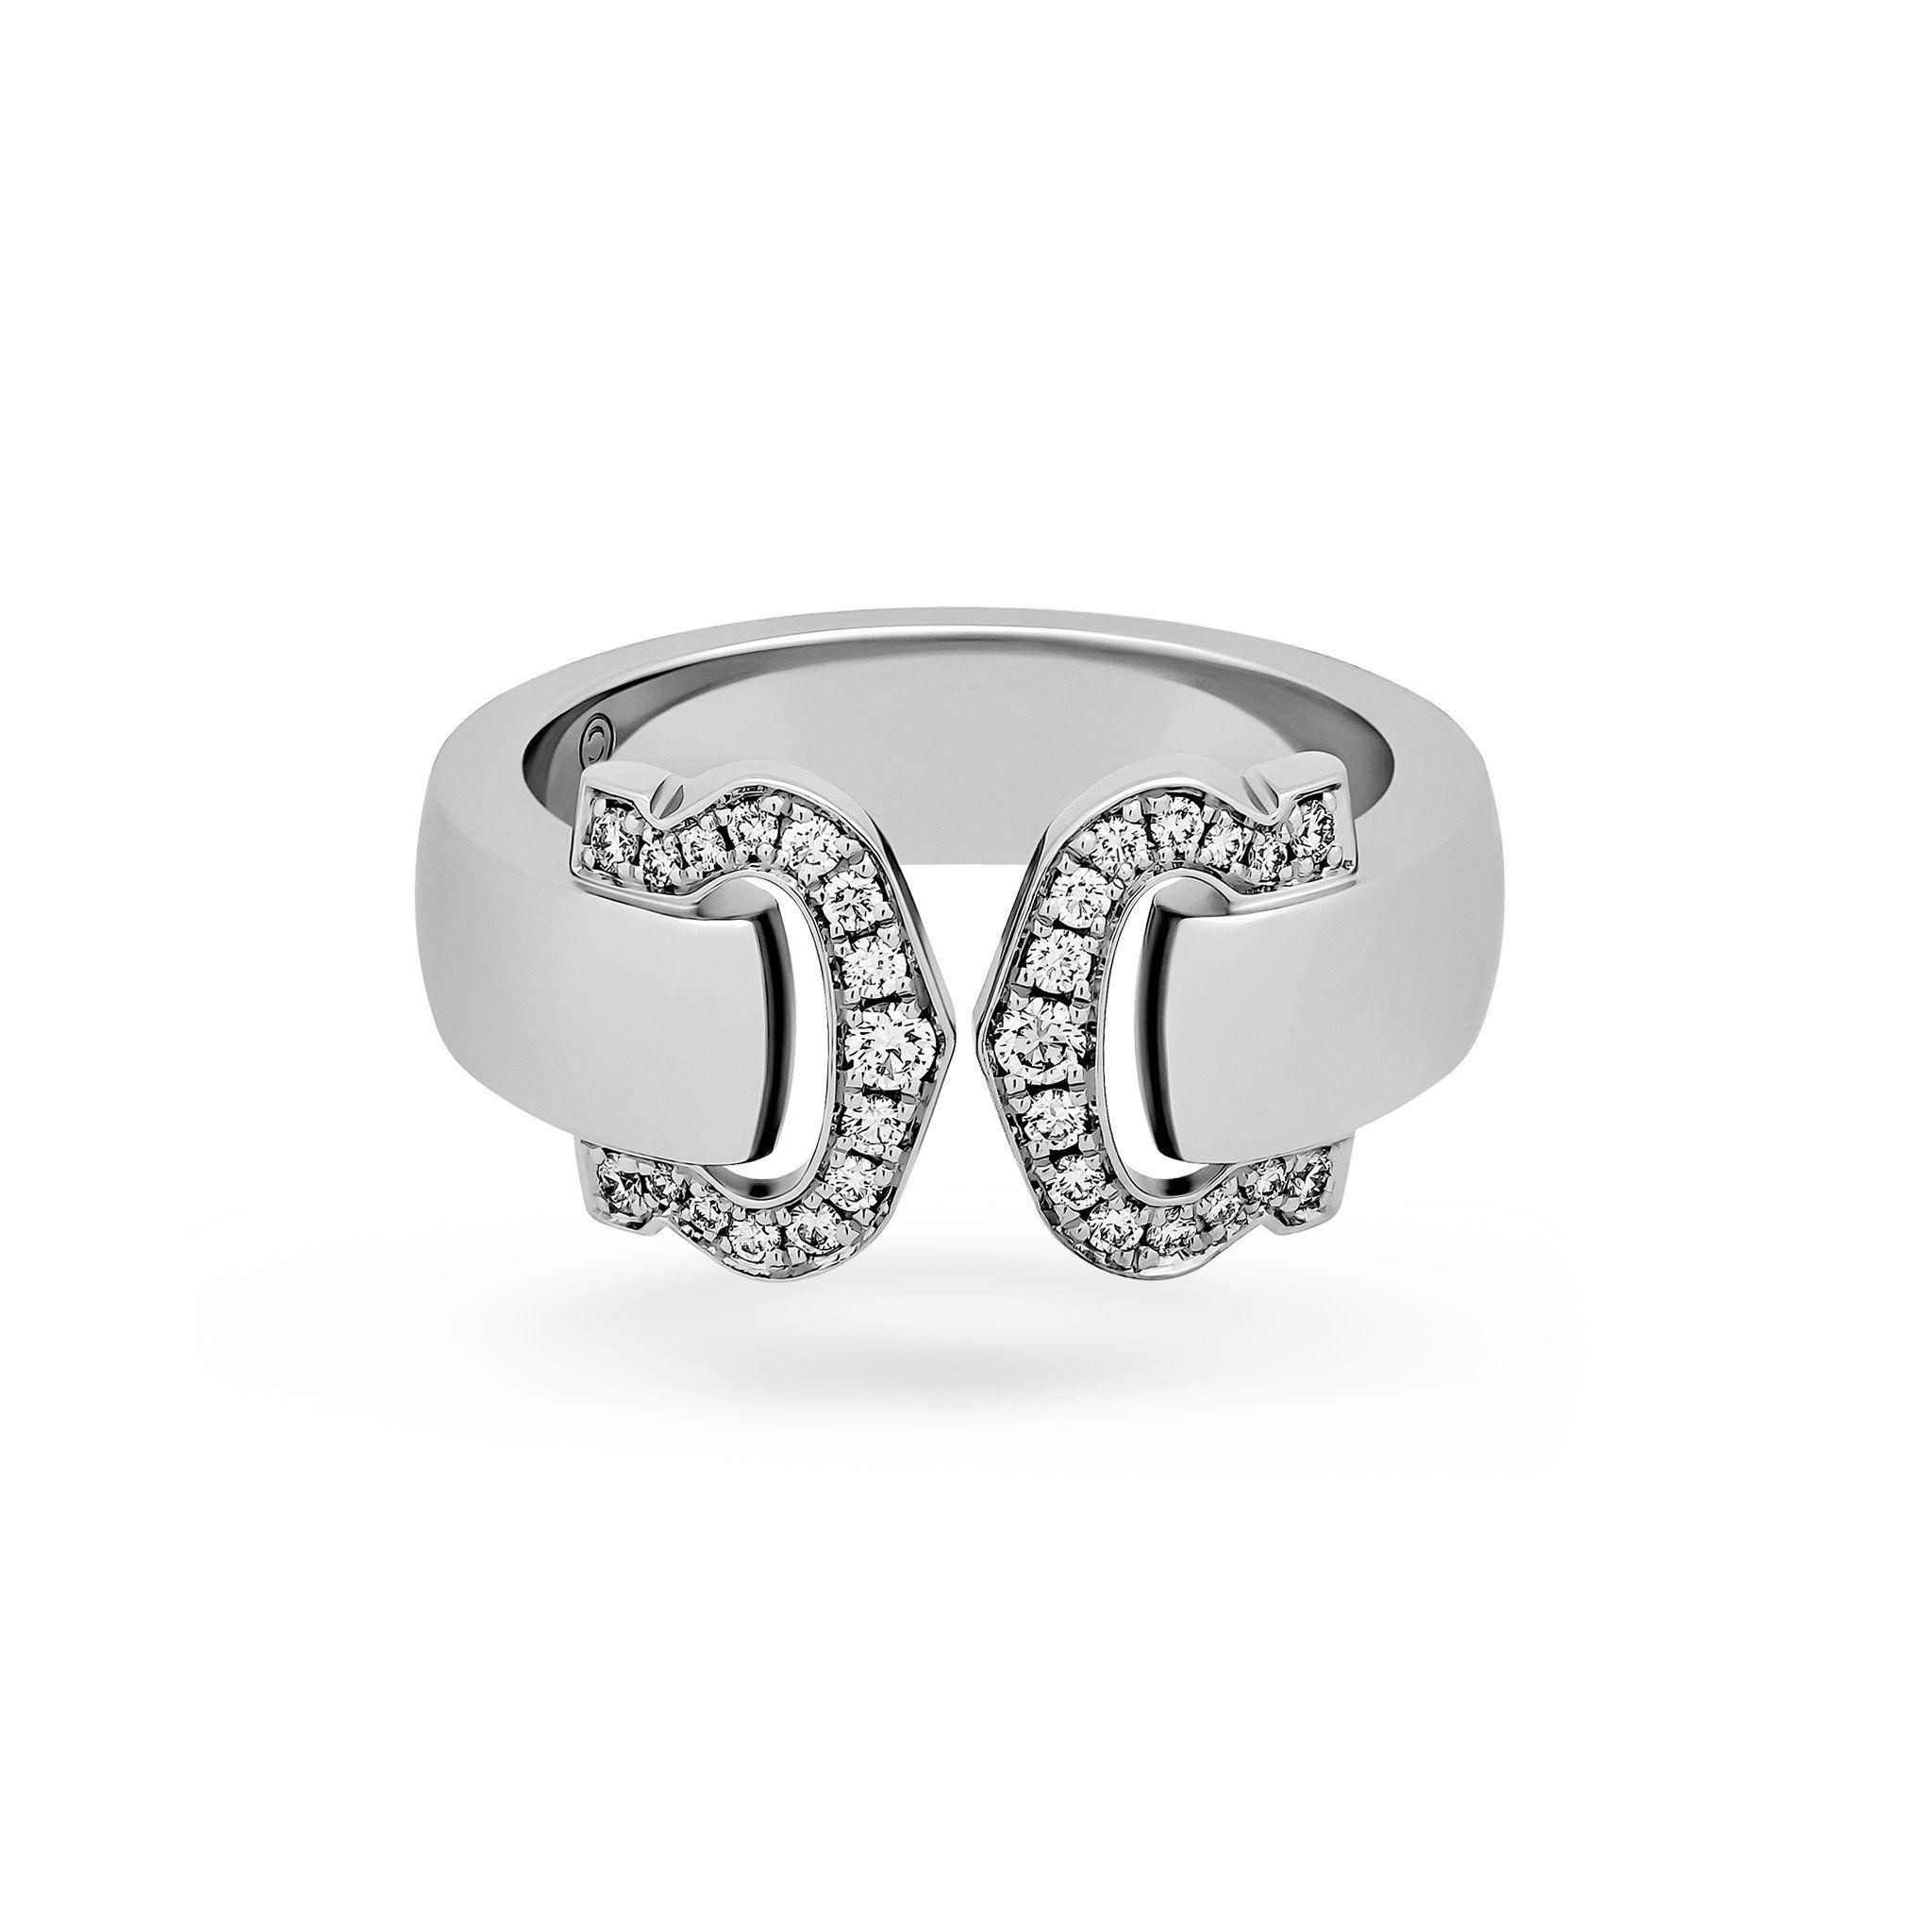 C in Diamond Logo - Cartier 18K White Gold Double C Logo Diamond Ring Size 5.75